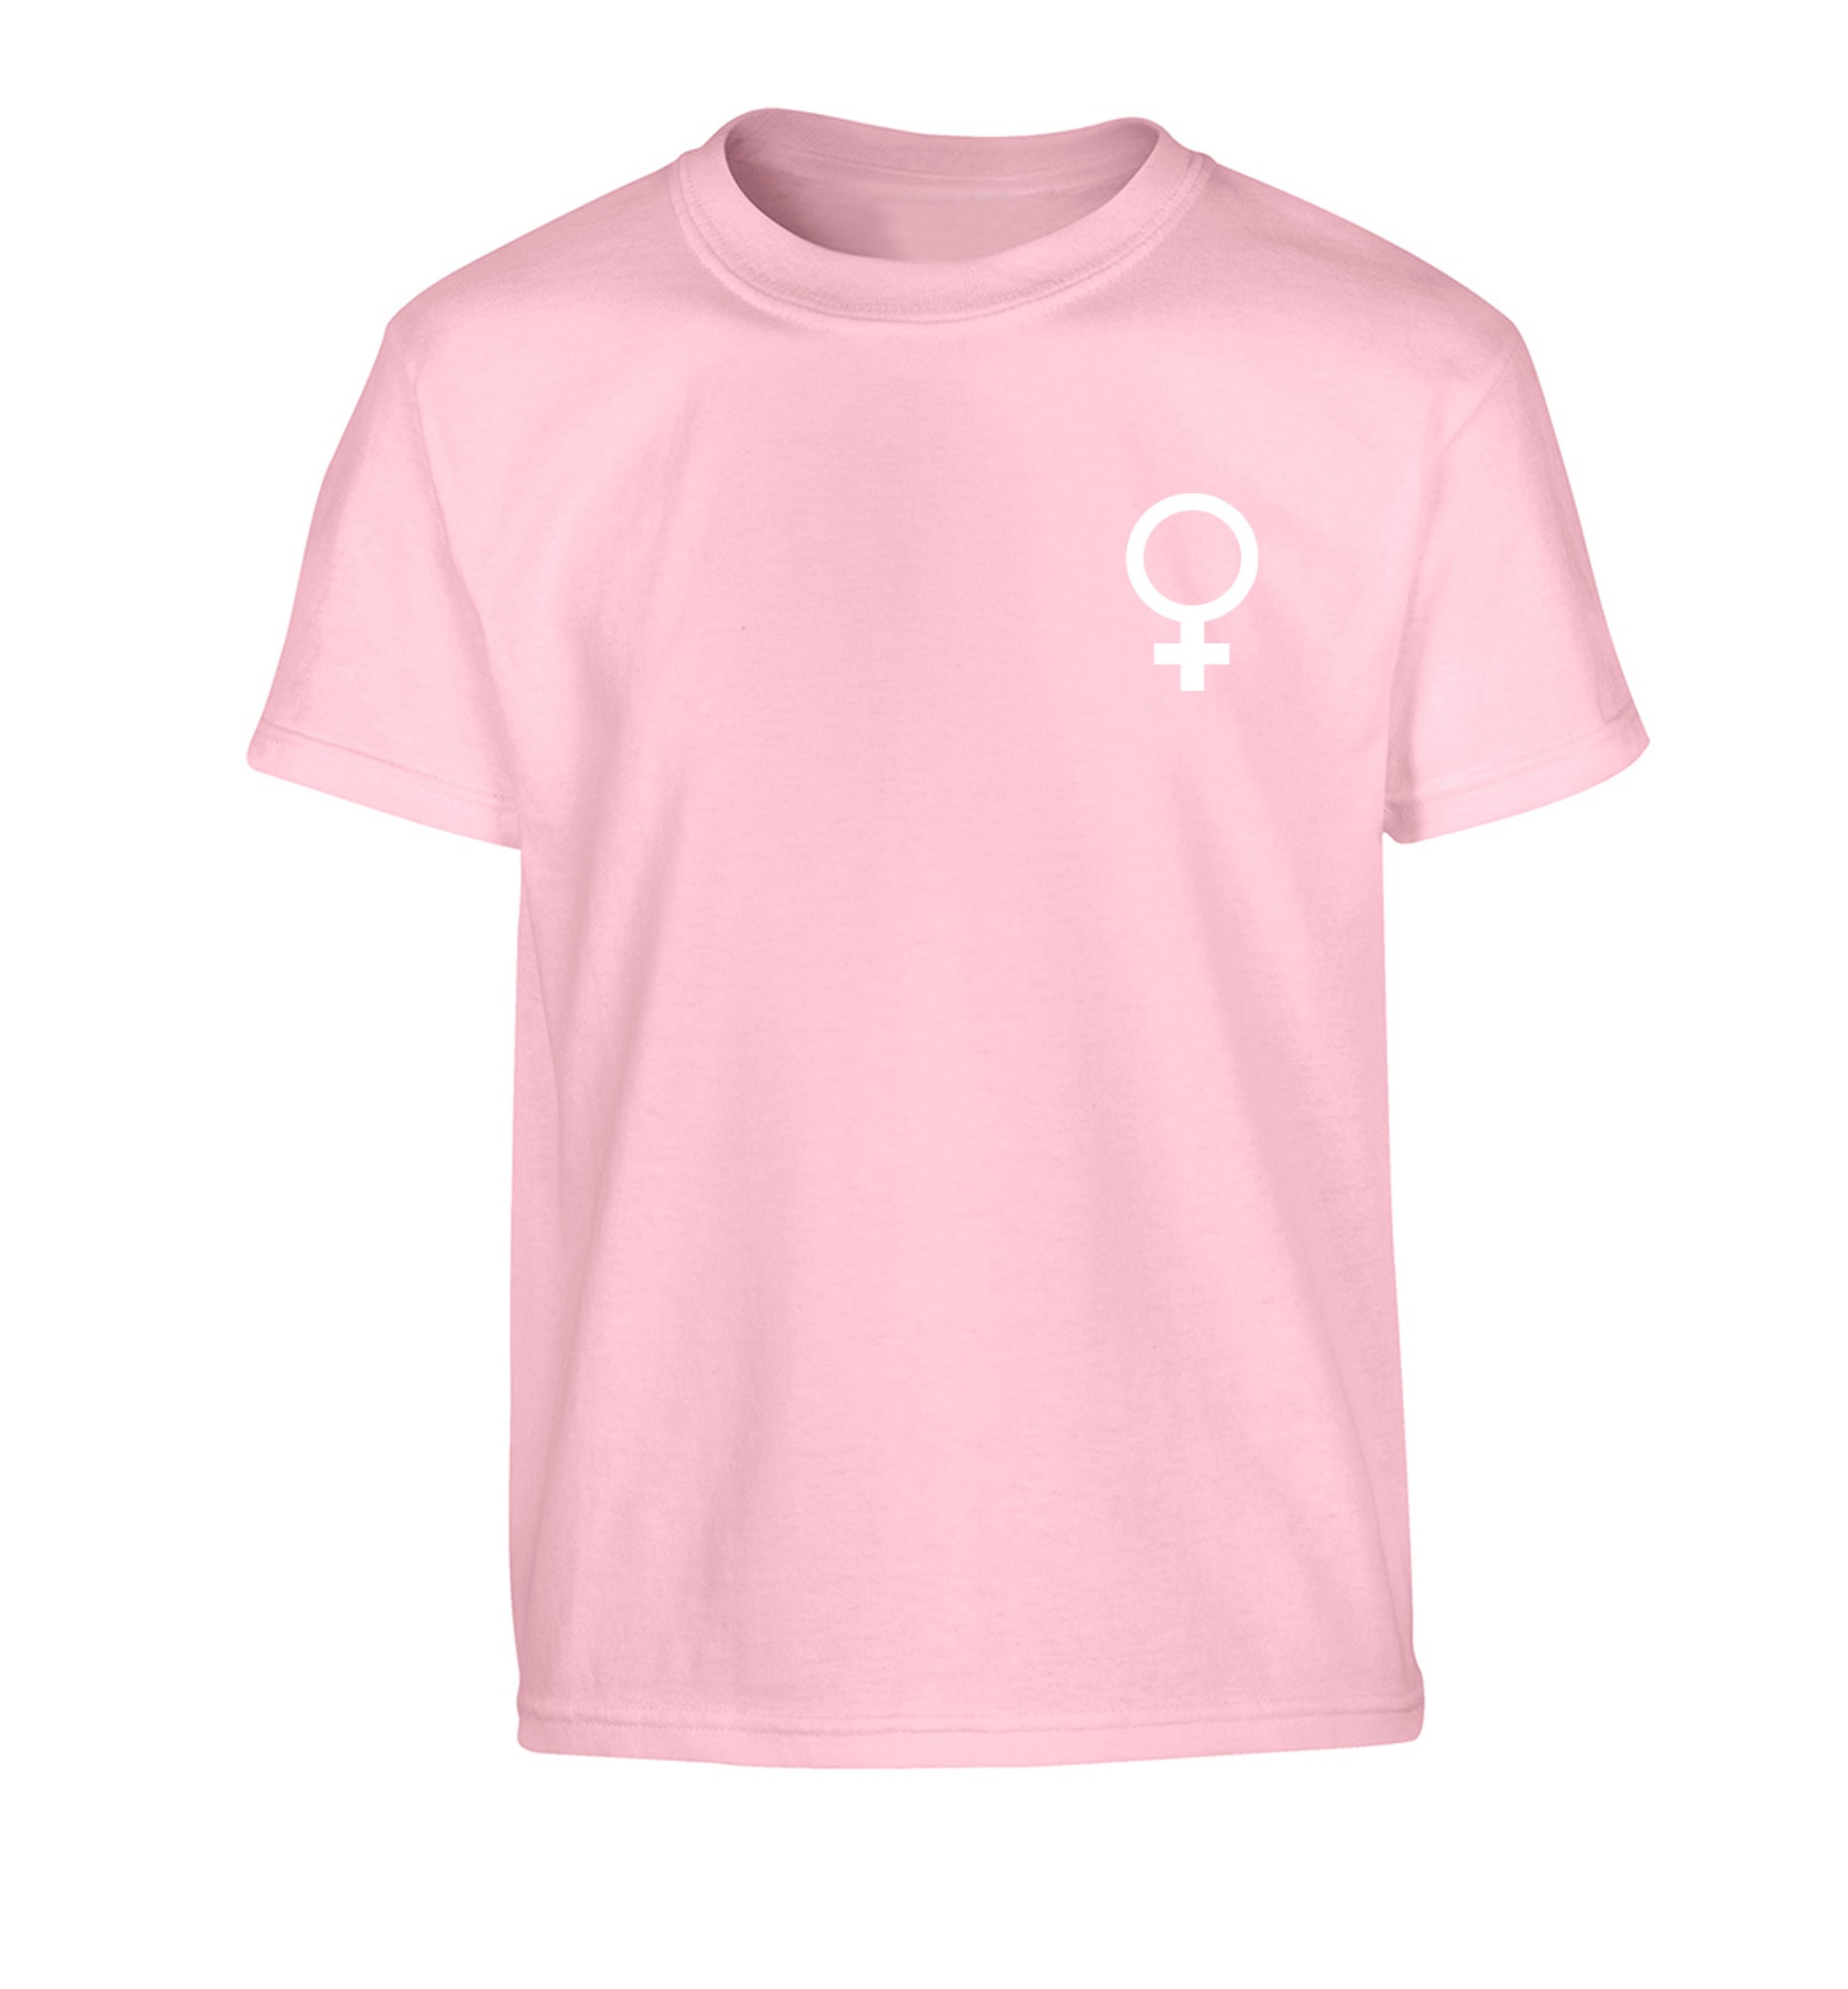 Female pocket symbol Children's light pink Tshirt 12-14 Years